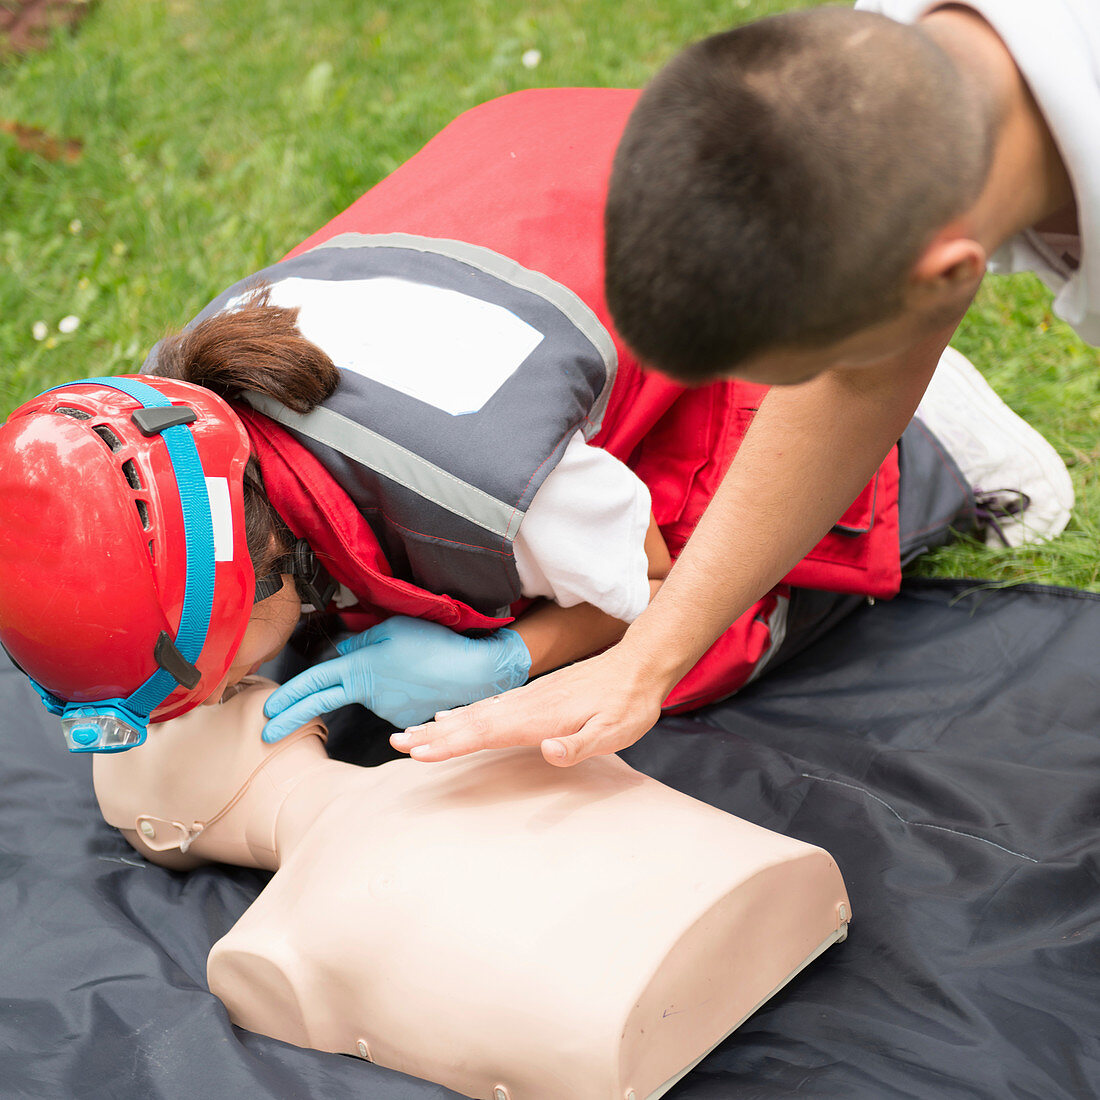 CPR training on dummy